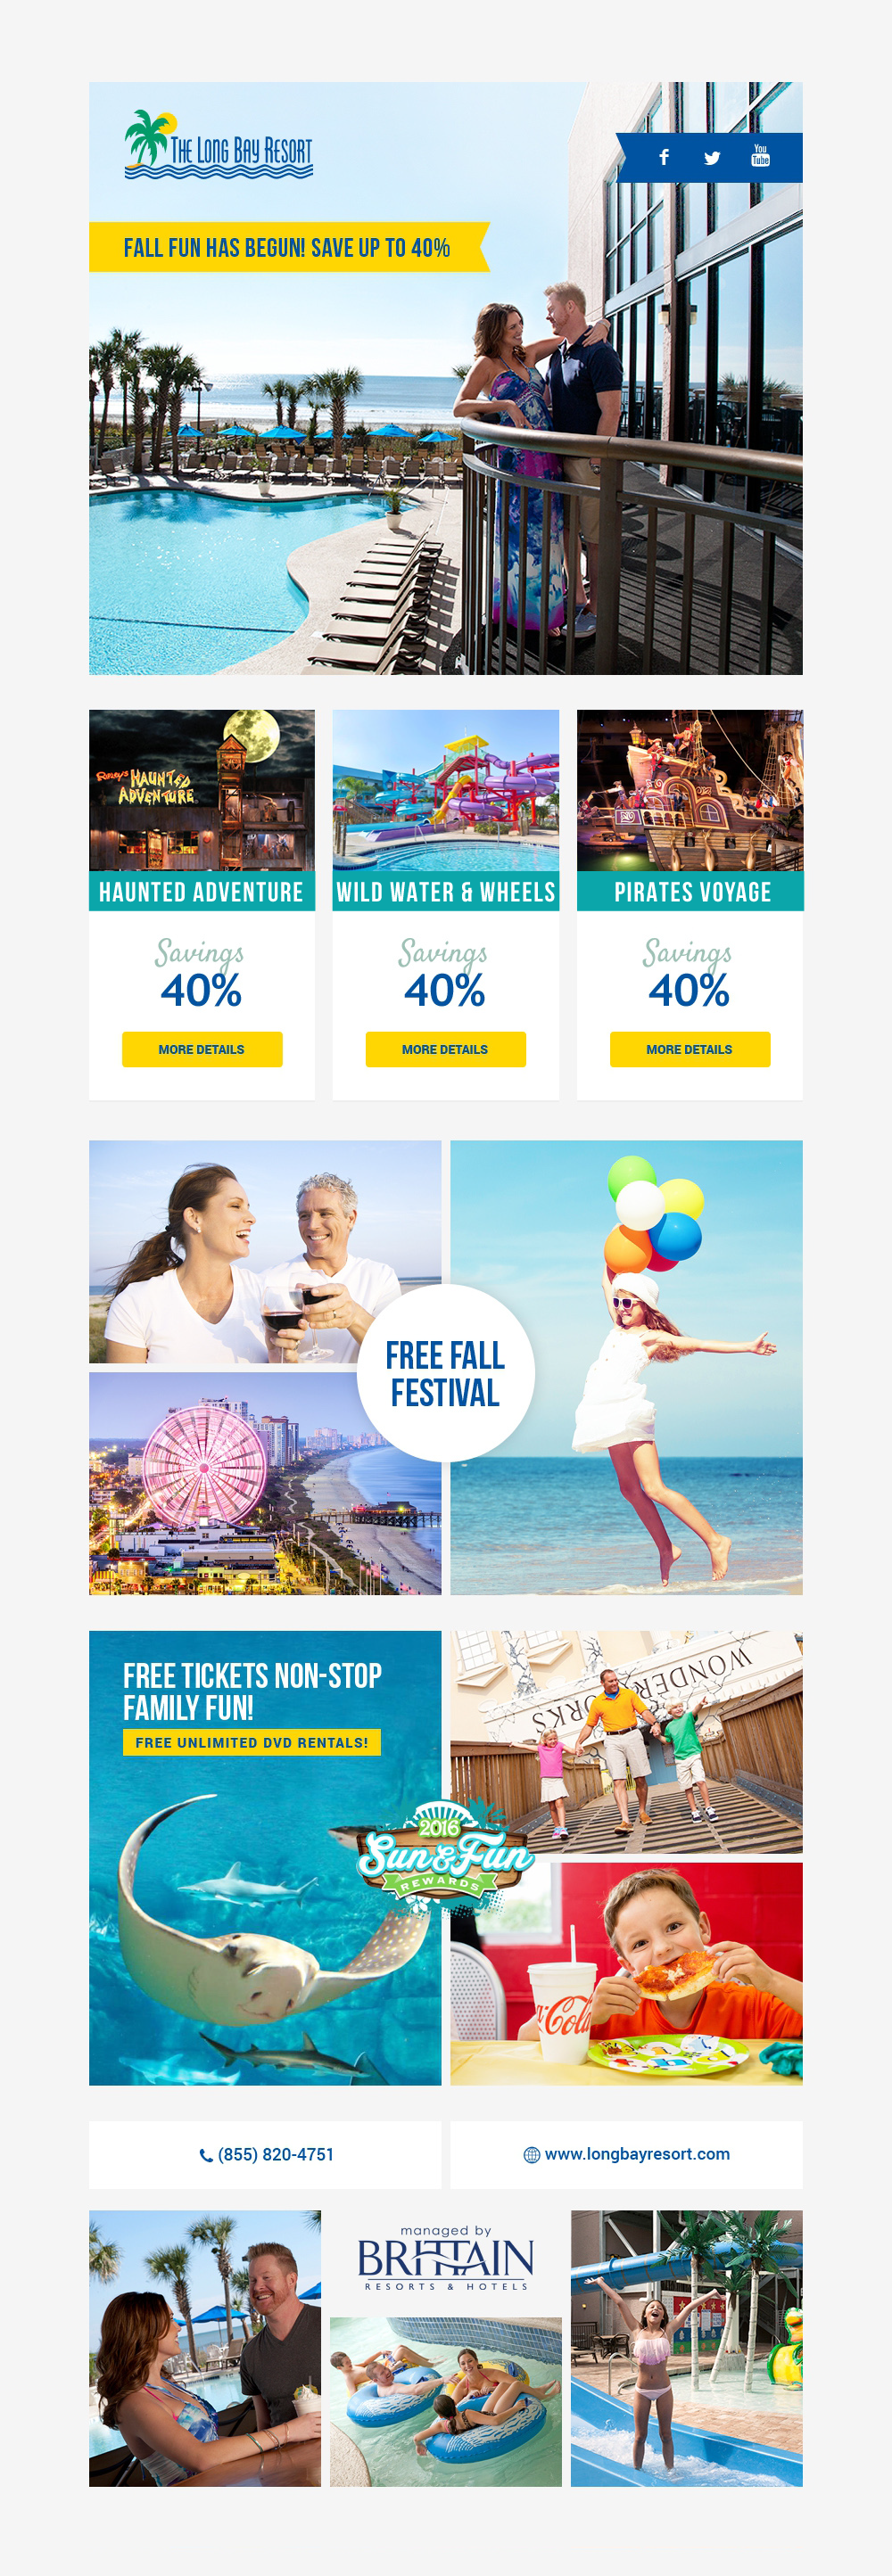 Email Design Fun newsletter resort marketing   ad